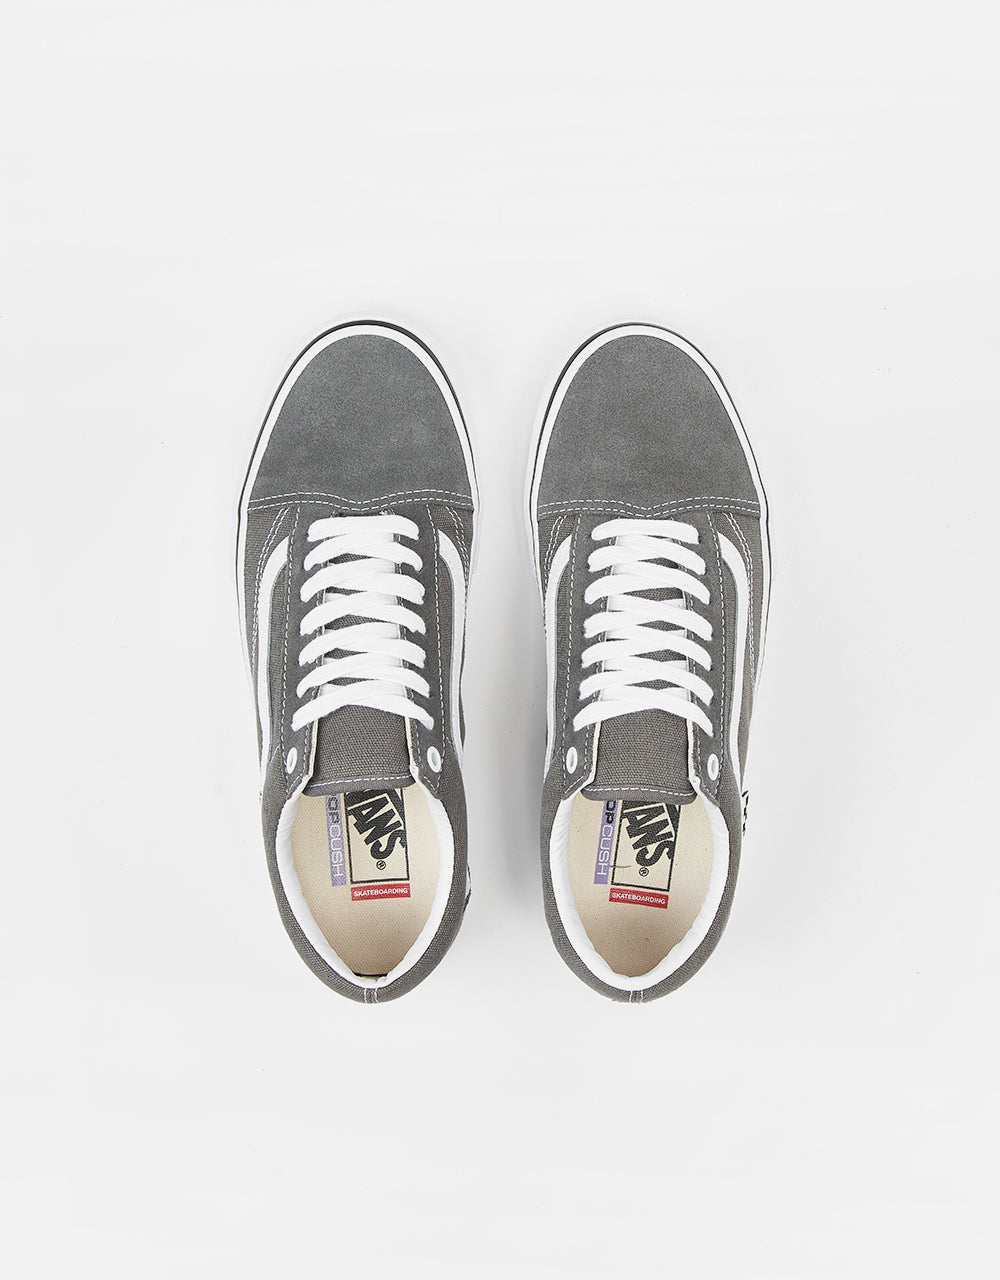 Vans Old Skool Skate Shoes - Pewter/White